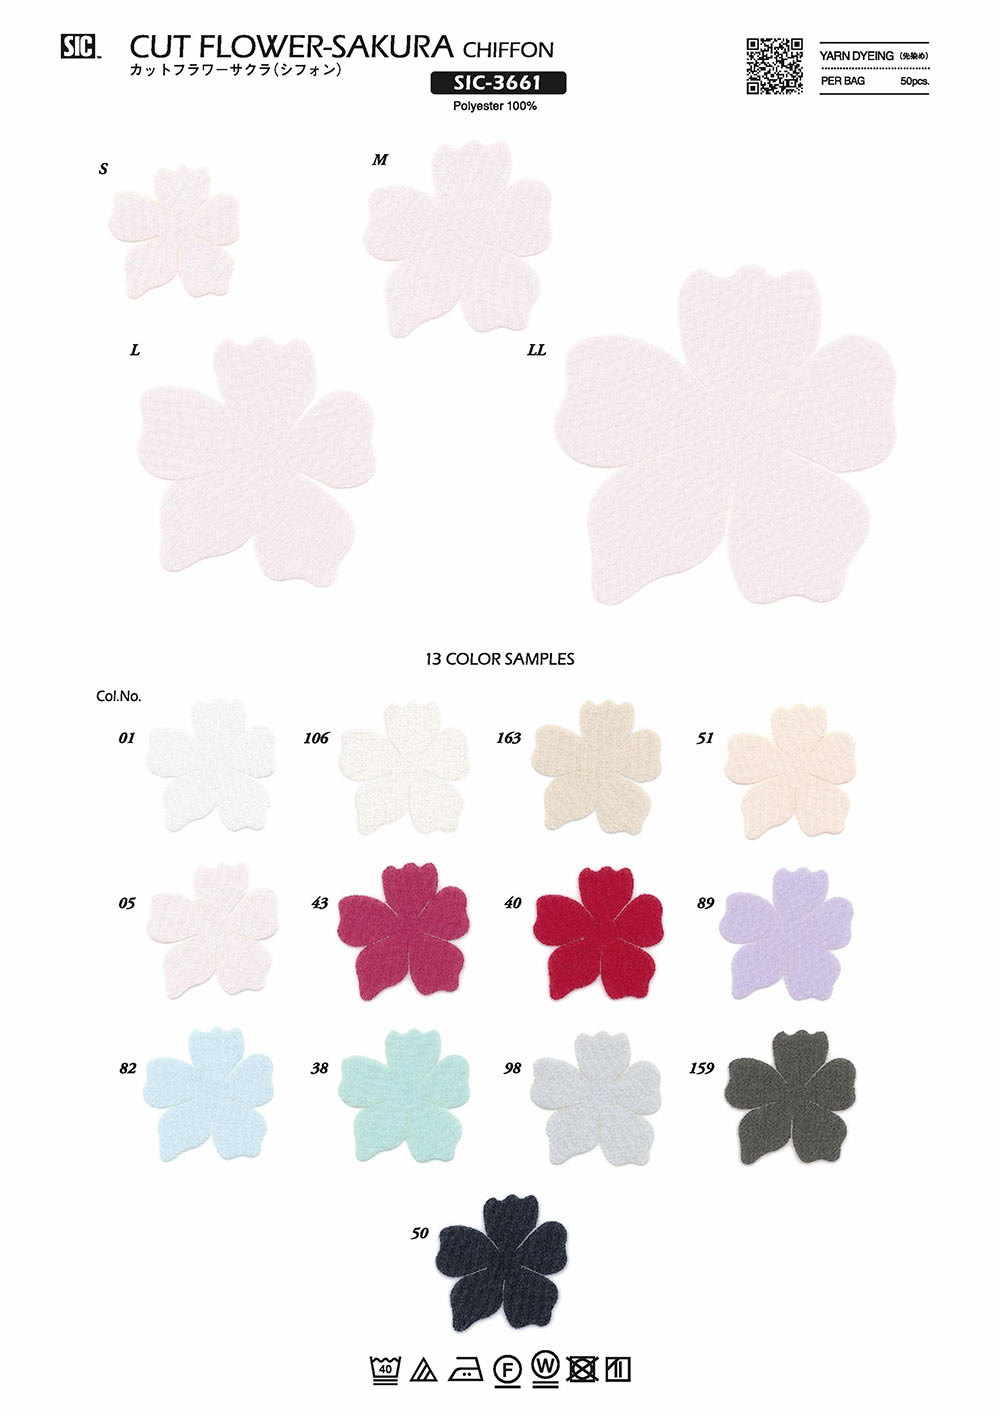 SIC-3661 Cut Flower Sakura (Chiffon)[Miscellaneous Goods And Others] SHINDO(SIC)